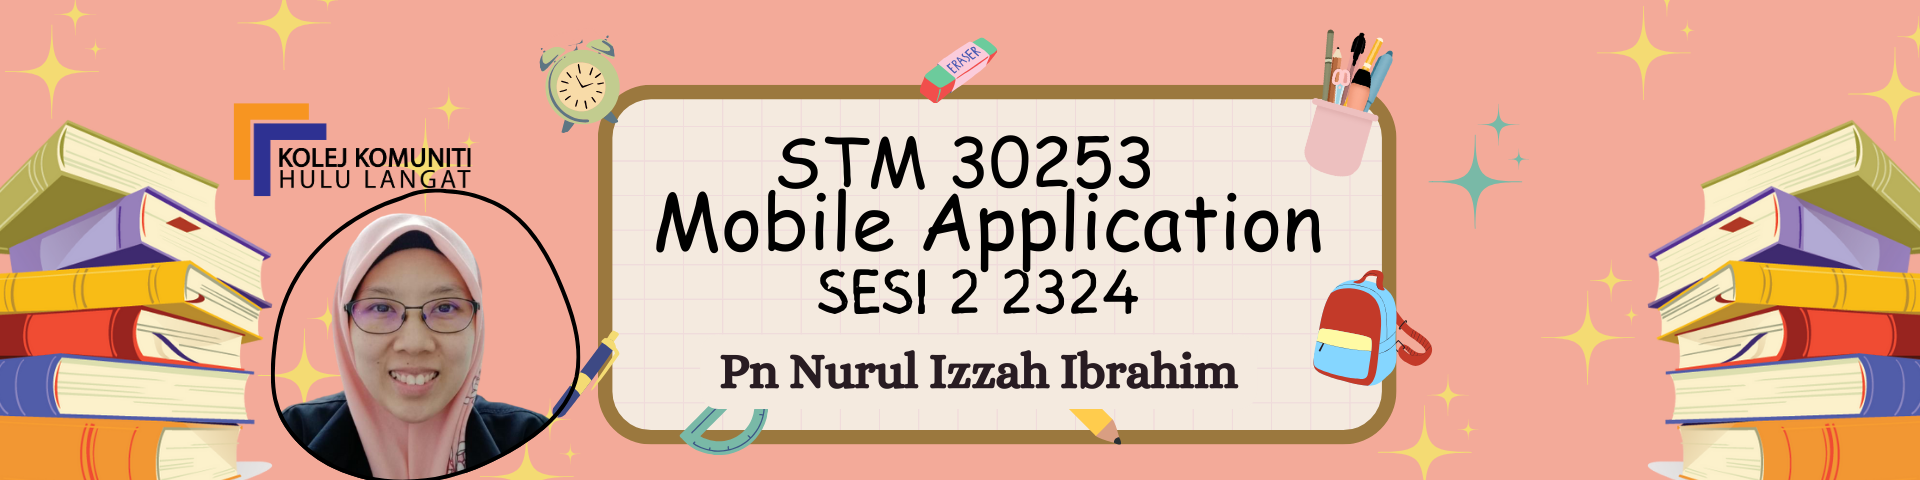 KKHL | STM 30253 MOBILE APPLICATION